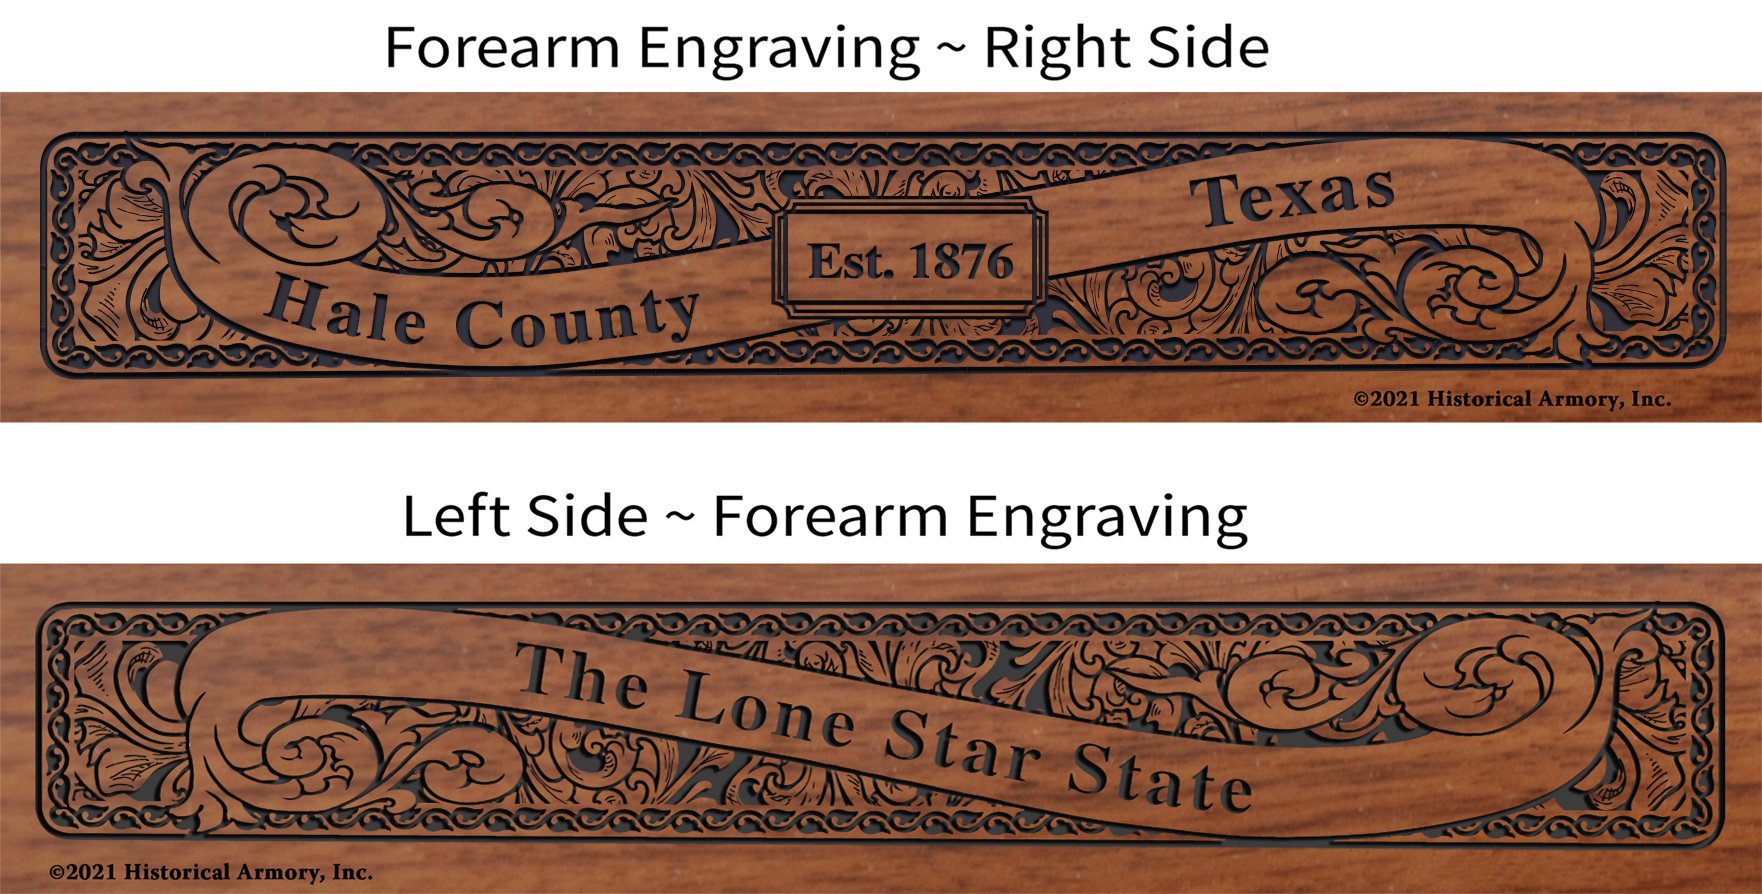 Hale County Texas Establishment and Motto History Engraved Rifle Forearm